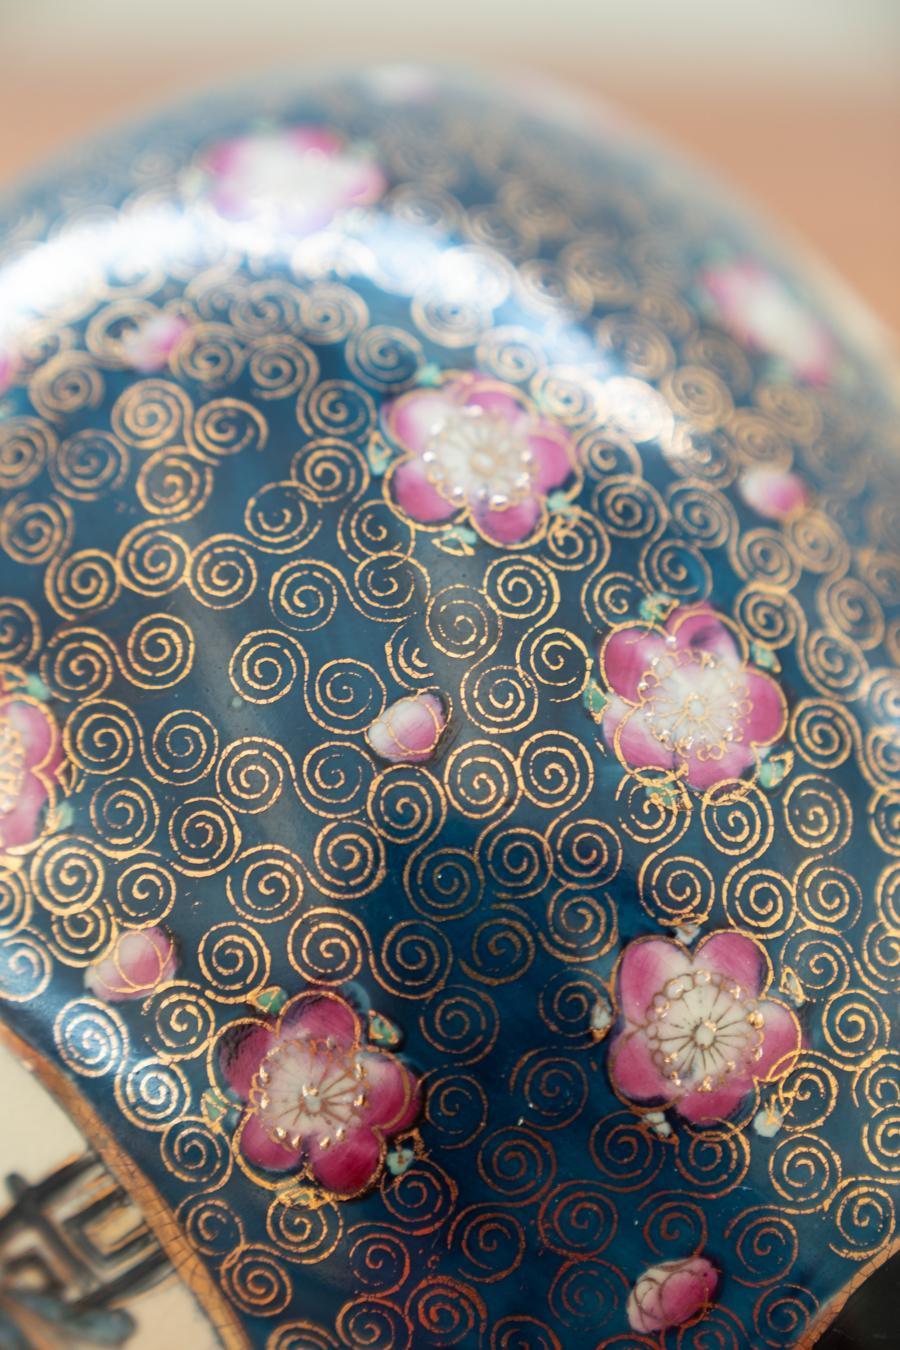 Japanese antique porcelain porcelain vases Meiji period 19th century For Sale 7